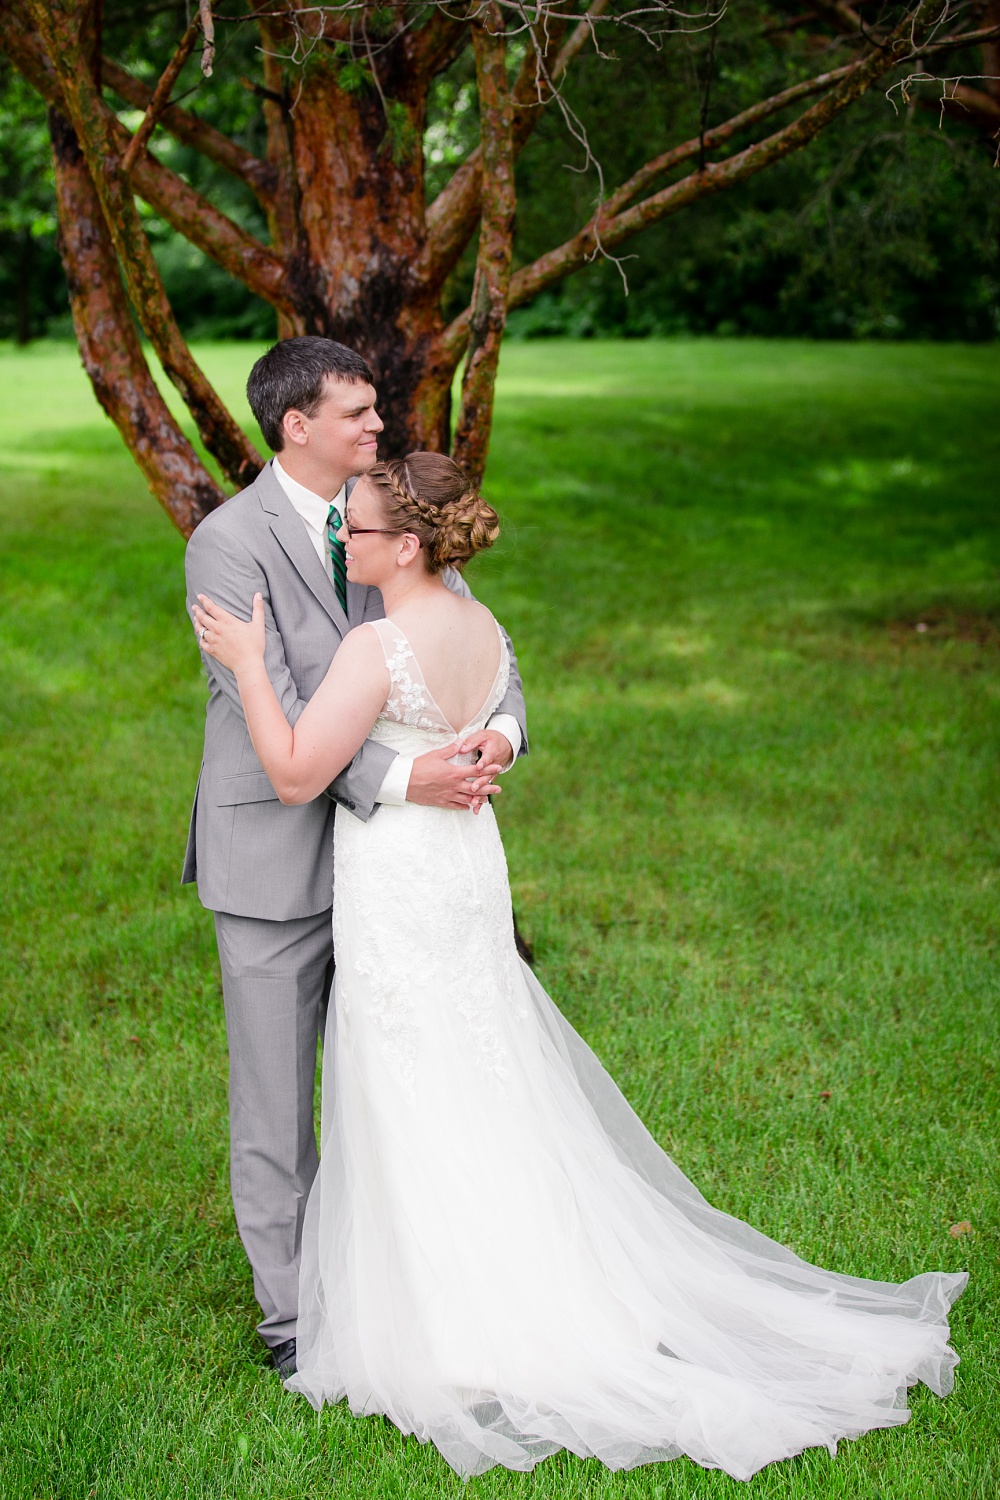 Moorhead, MN wedding | Photos at River Oaks Park | Ceremony at First Presbyterian Church | Amber Langerud Photography